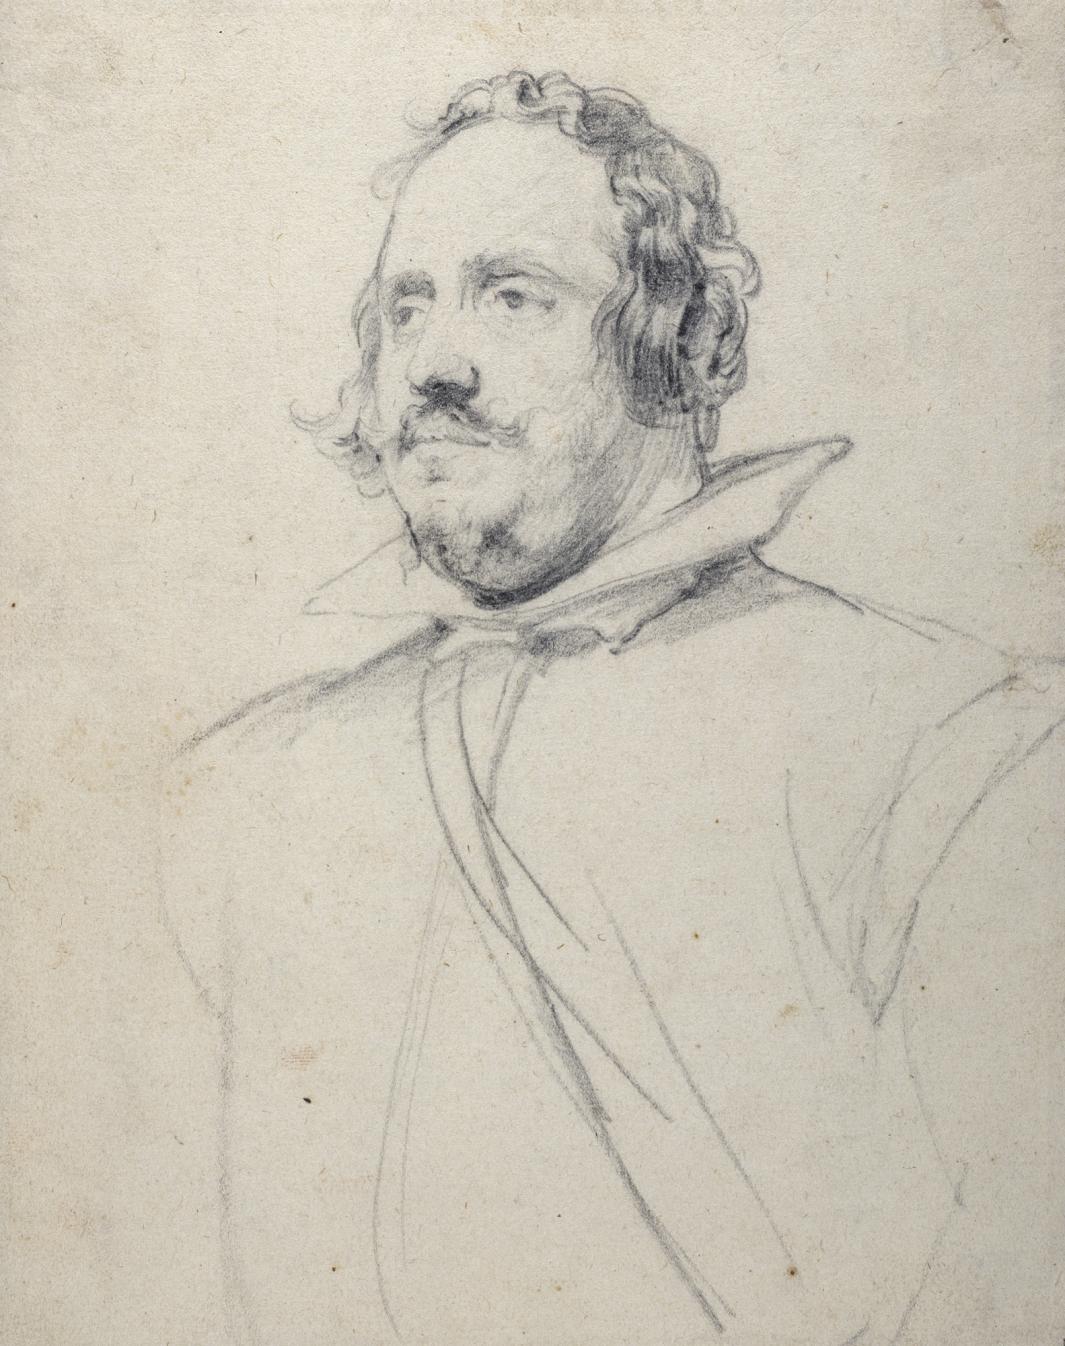 black chalk drawing of man looking left with beard, wearing large stiff collar